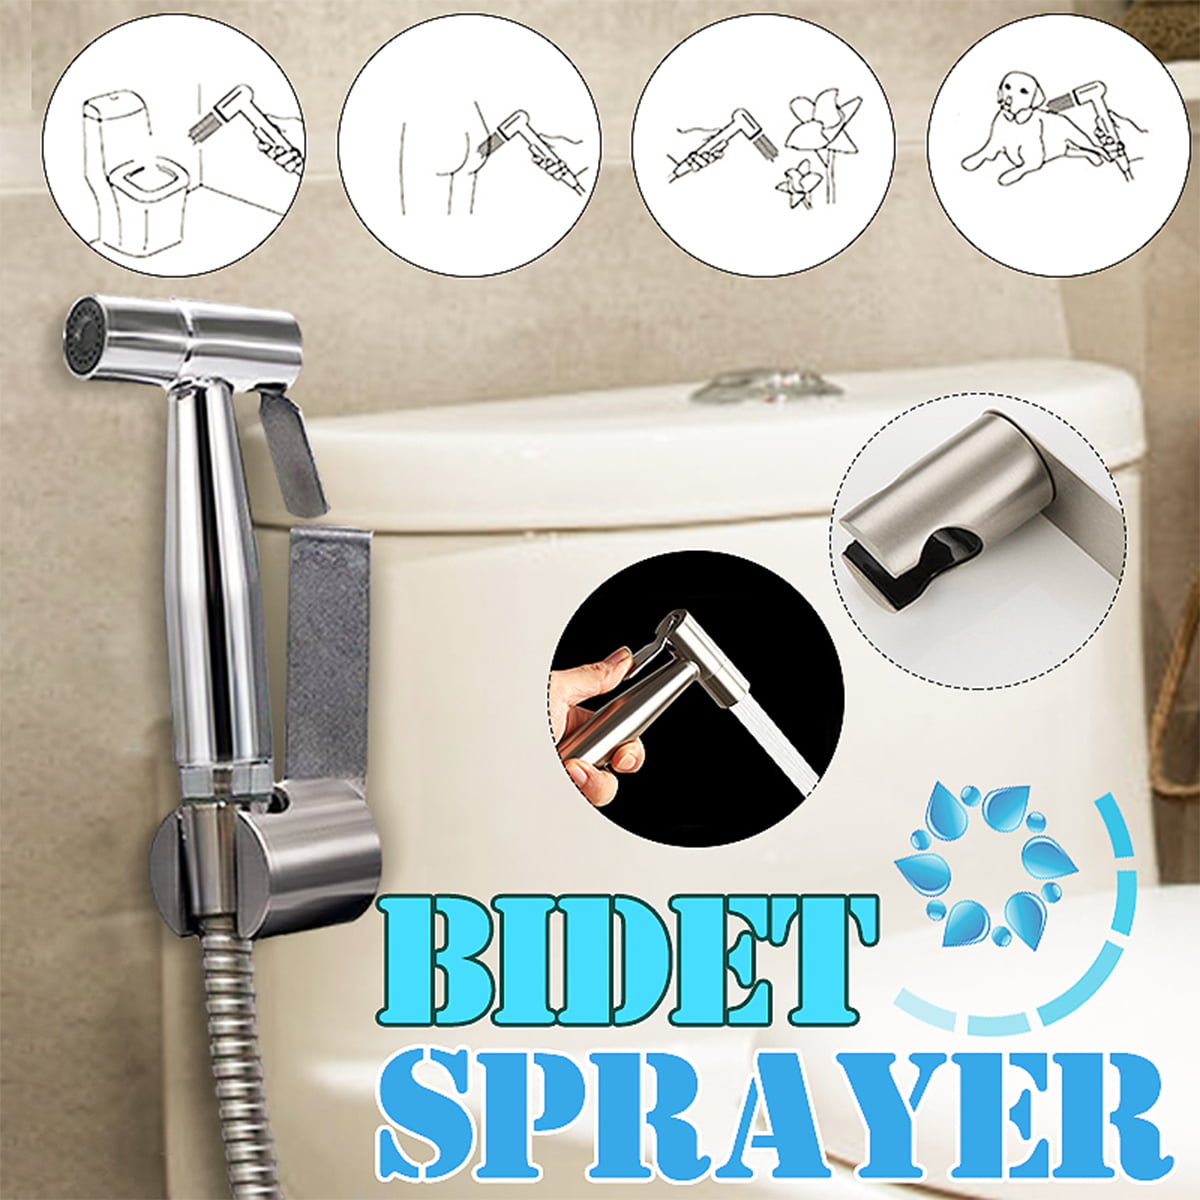 High Quality Hand Held Toilet Bidet Sprayer Bathroom Shower Water Spray Head Kit 